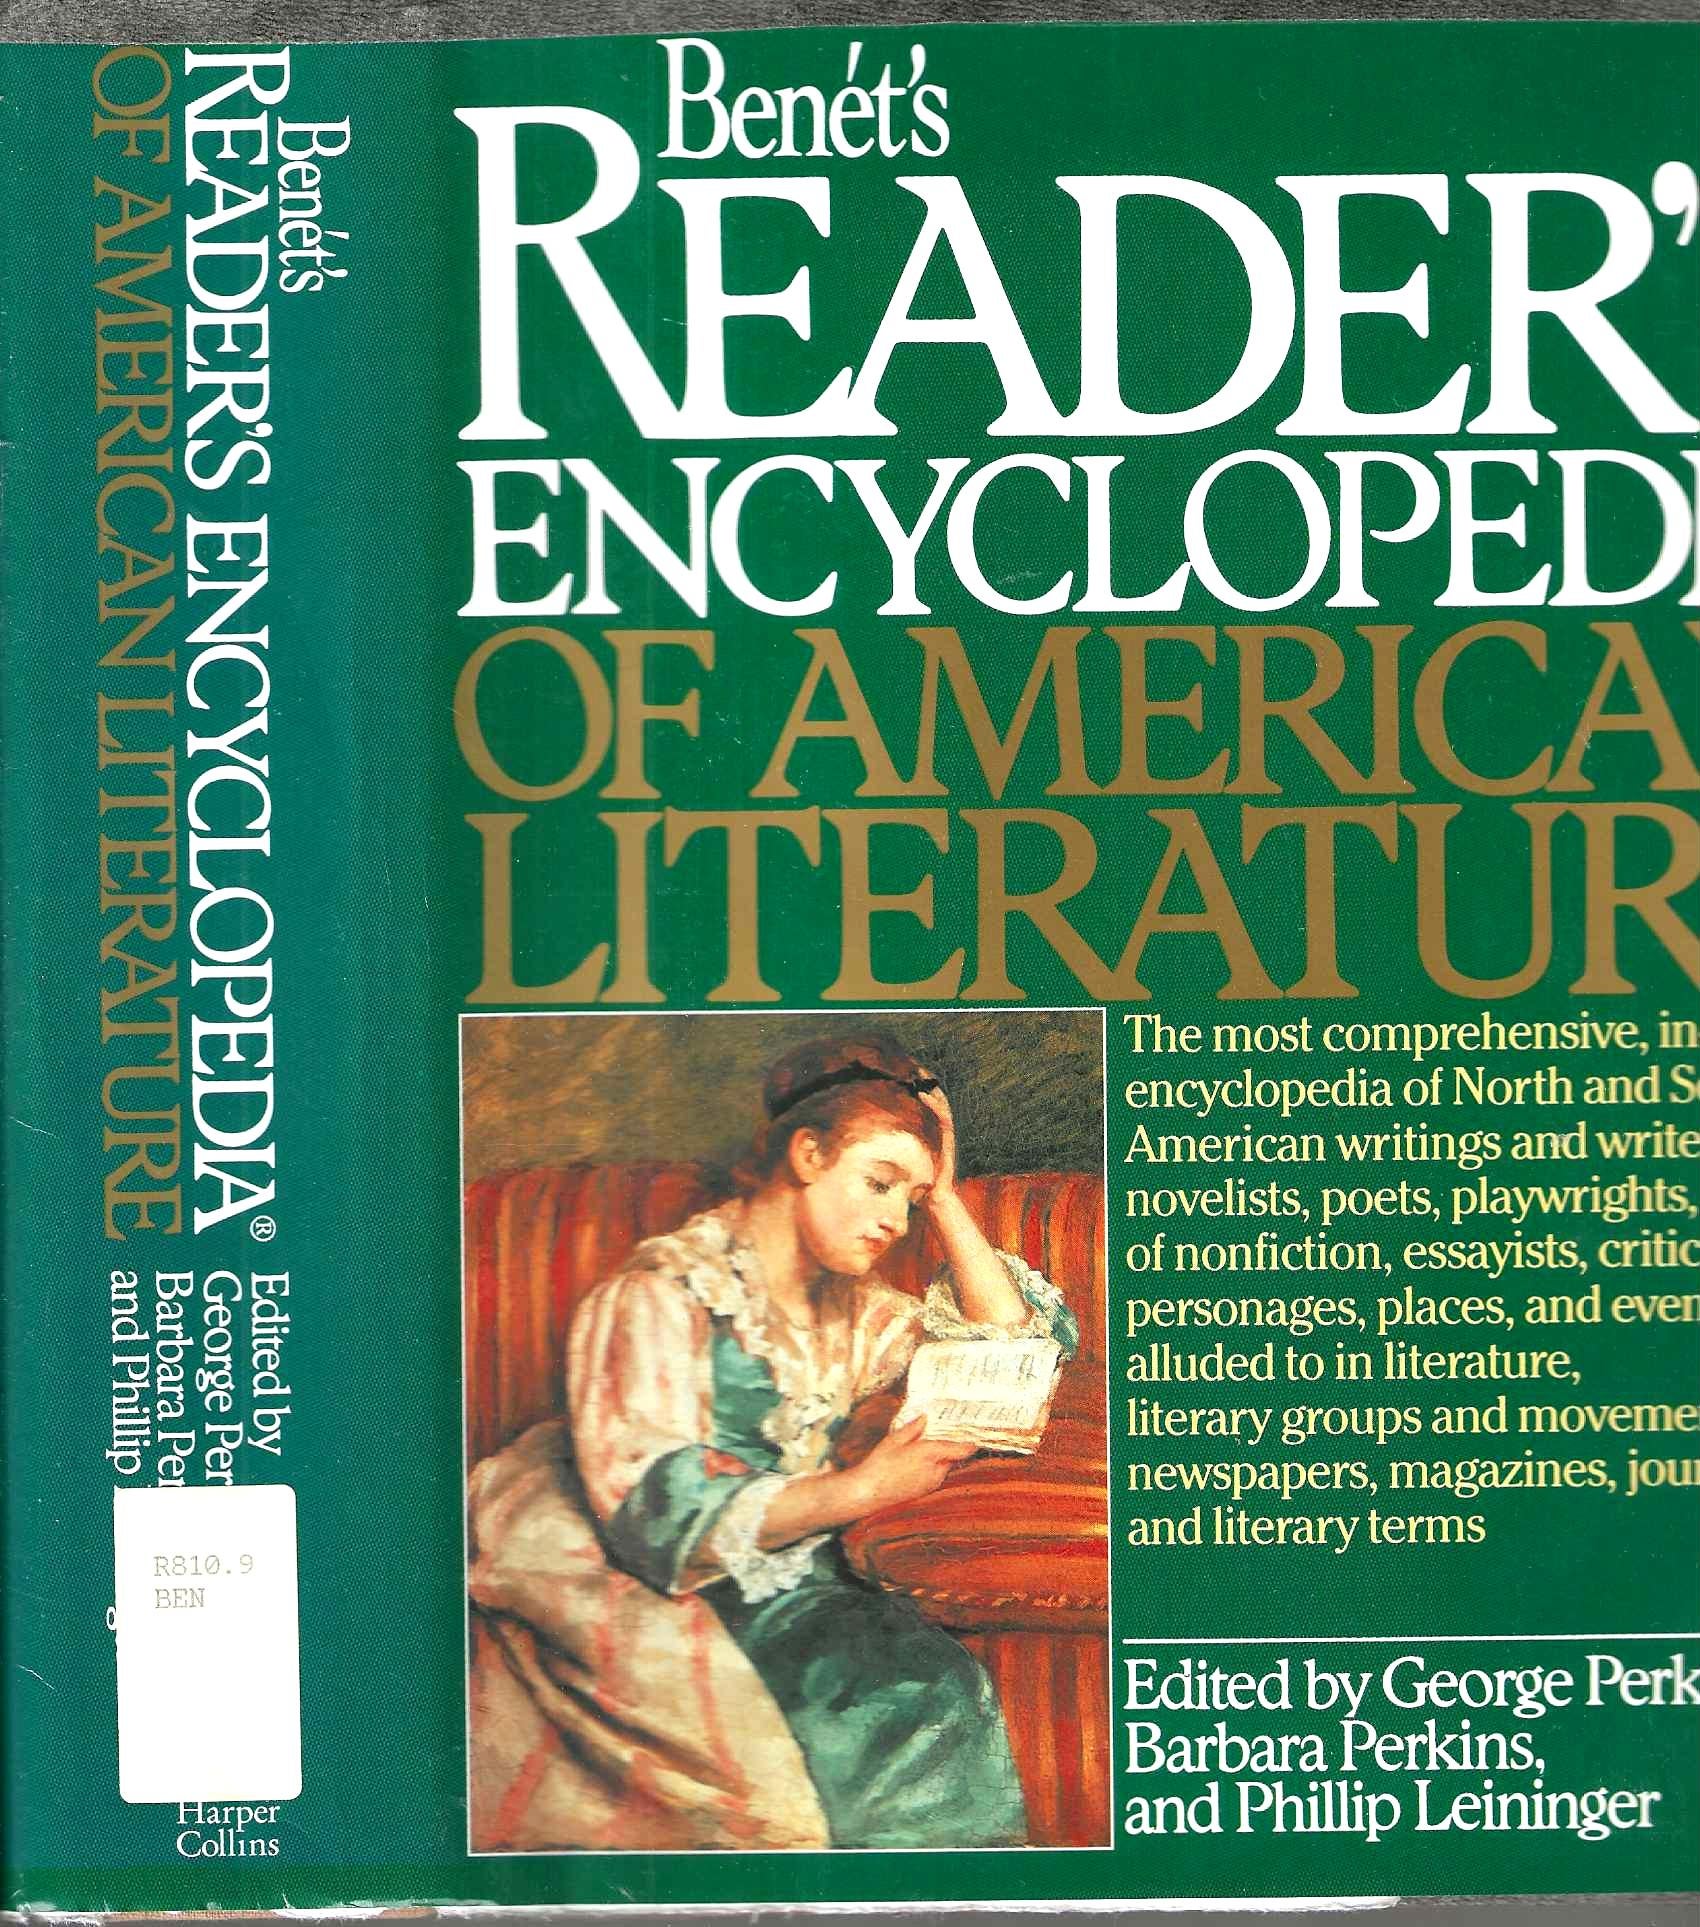 Benet's Reader's Encyclopedia of American Literature | George